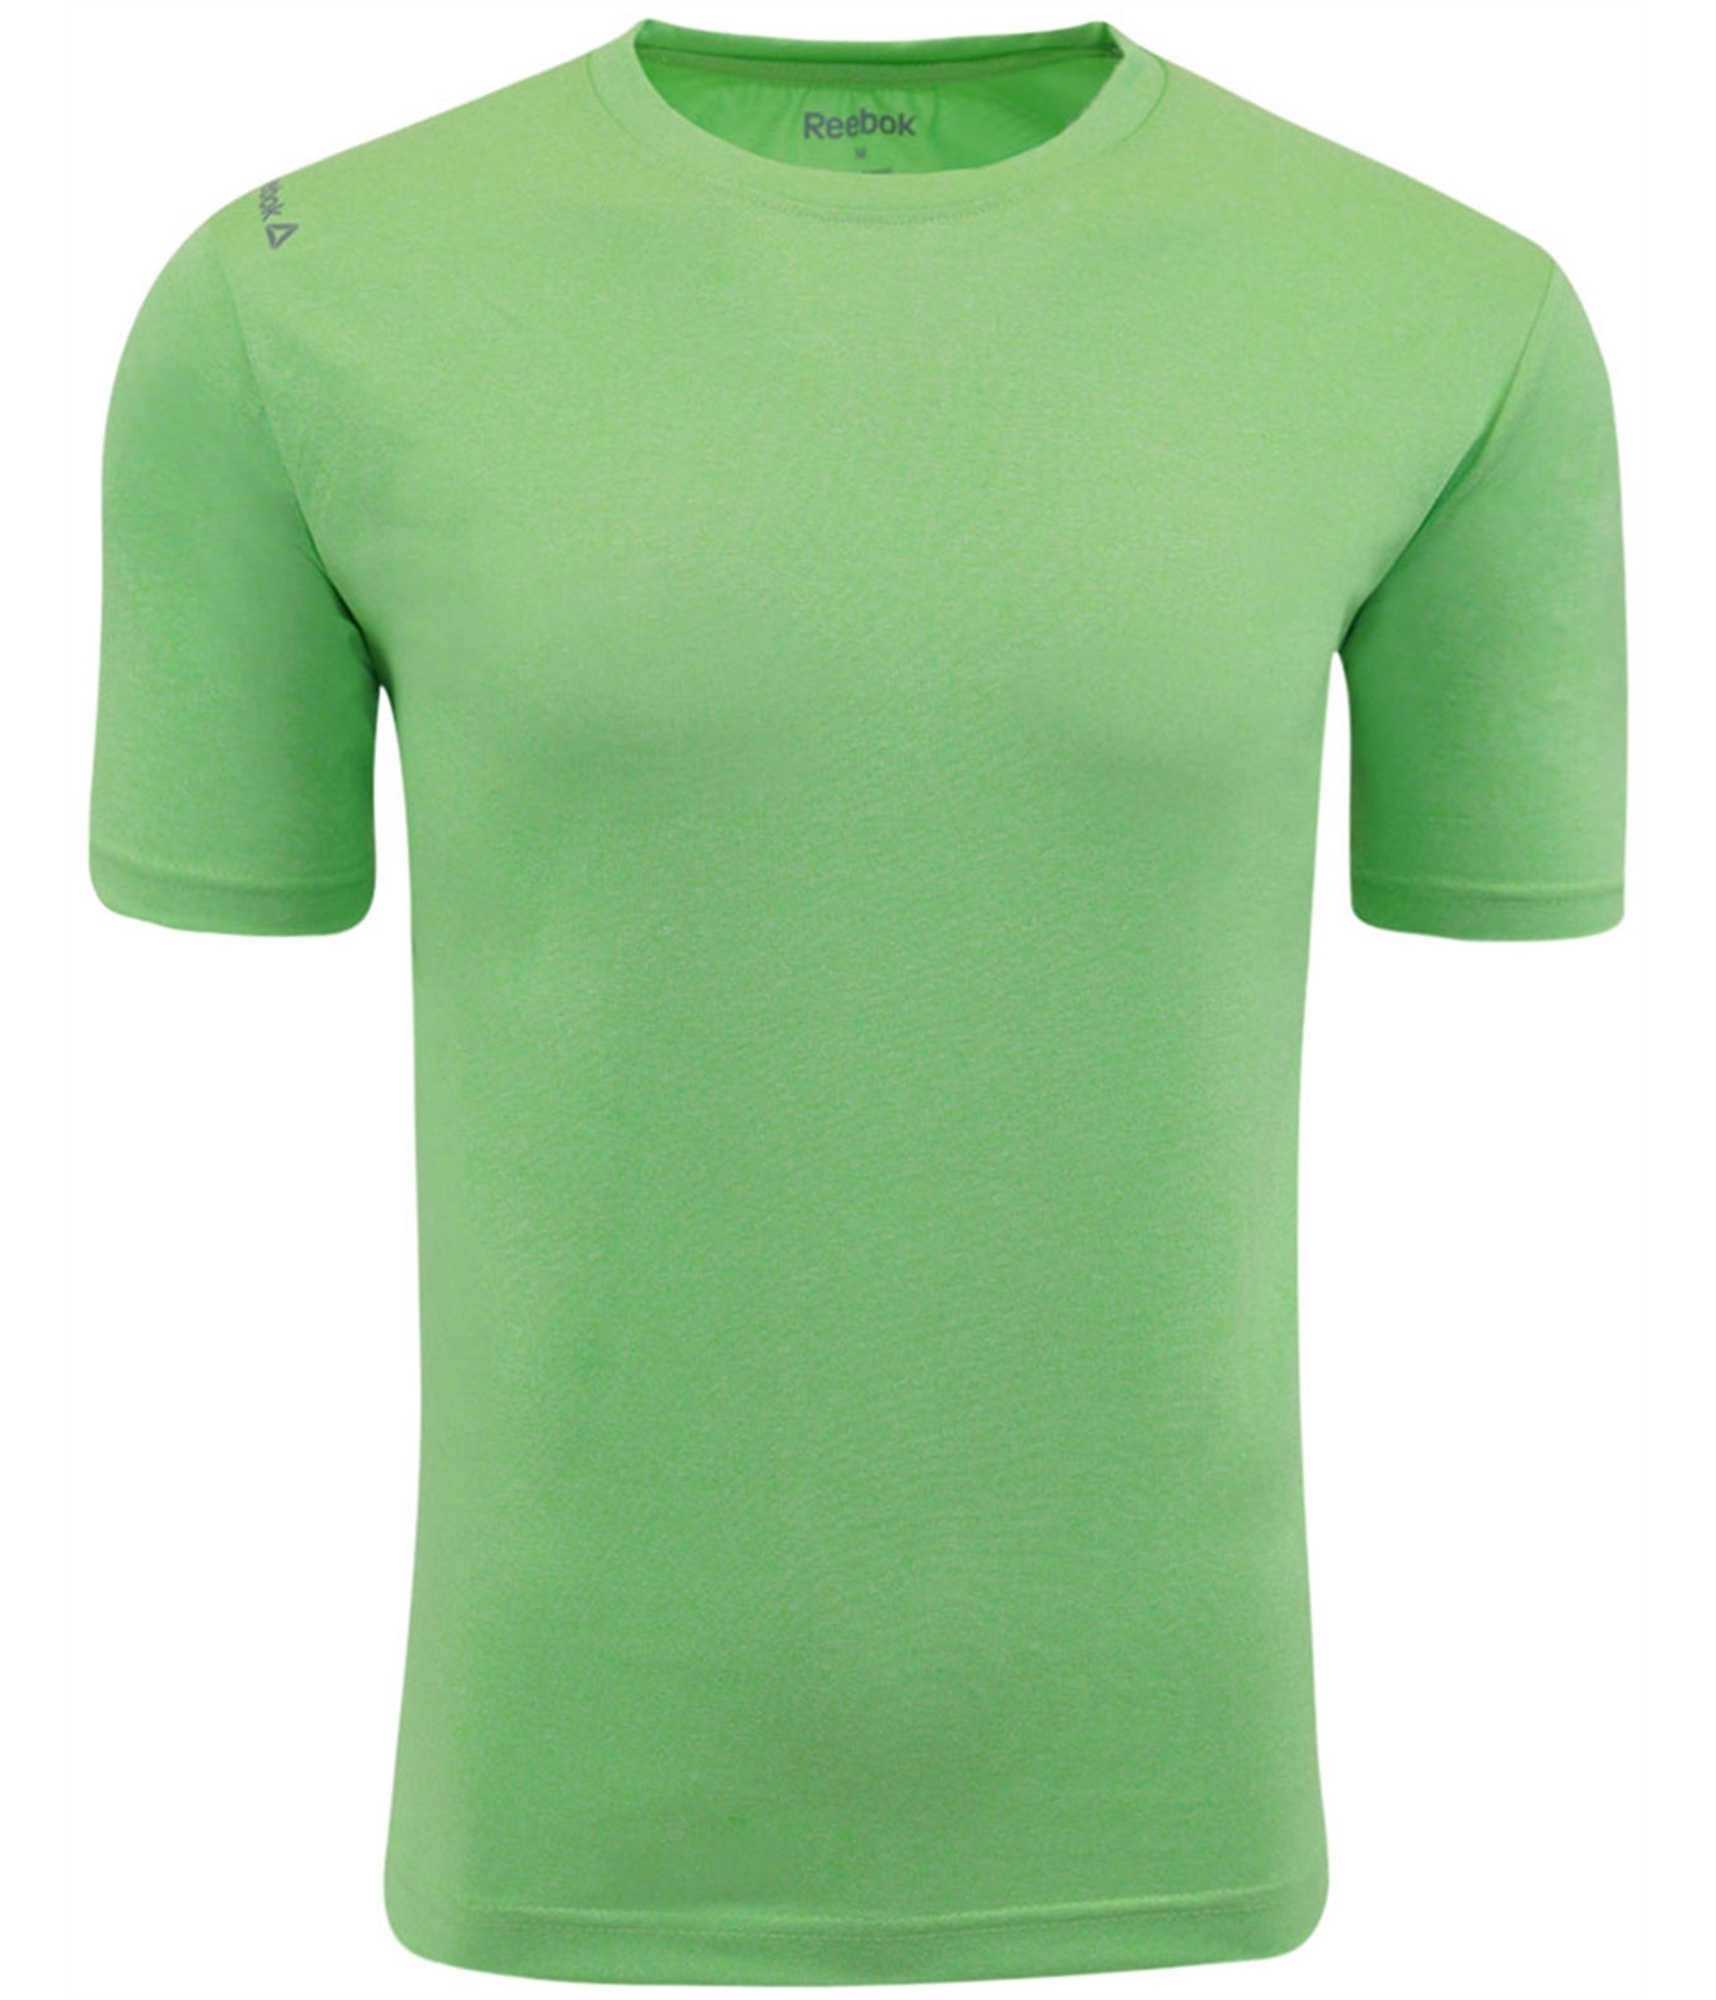 Reebok Mens Endurance Basic T-Shirt, Green, X-Large | eBay